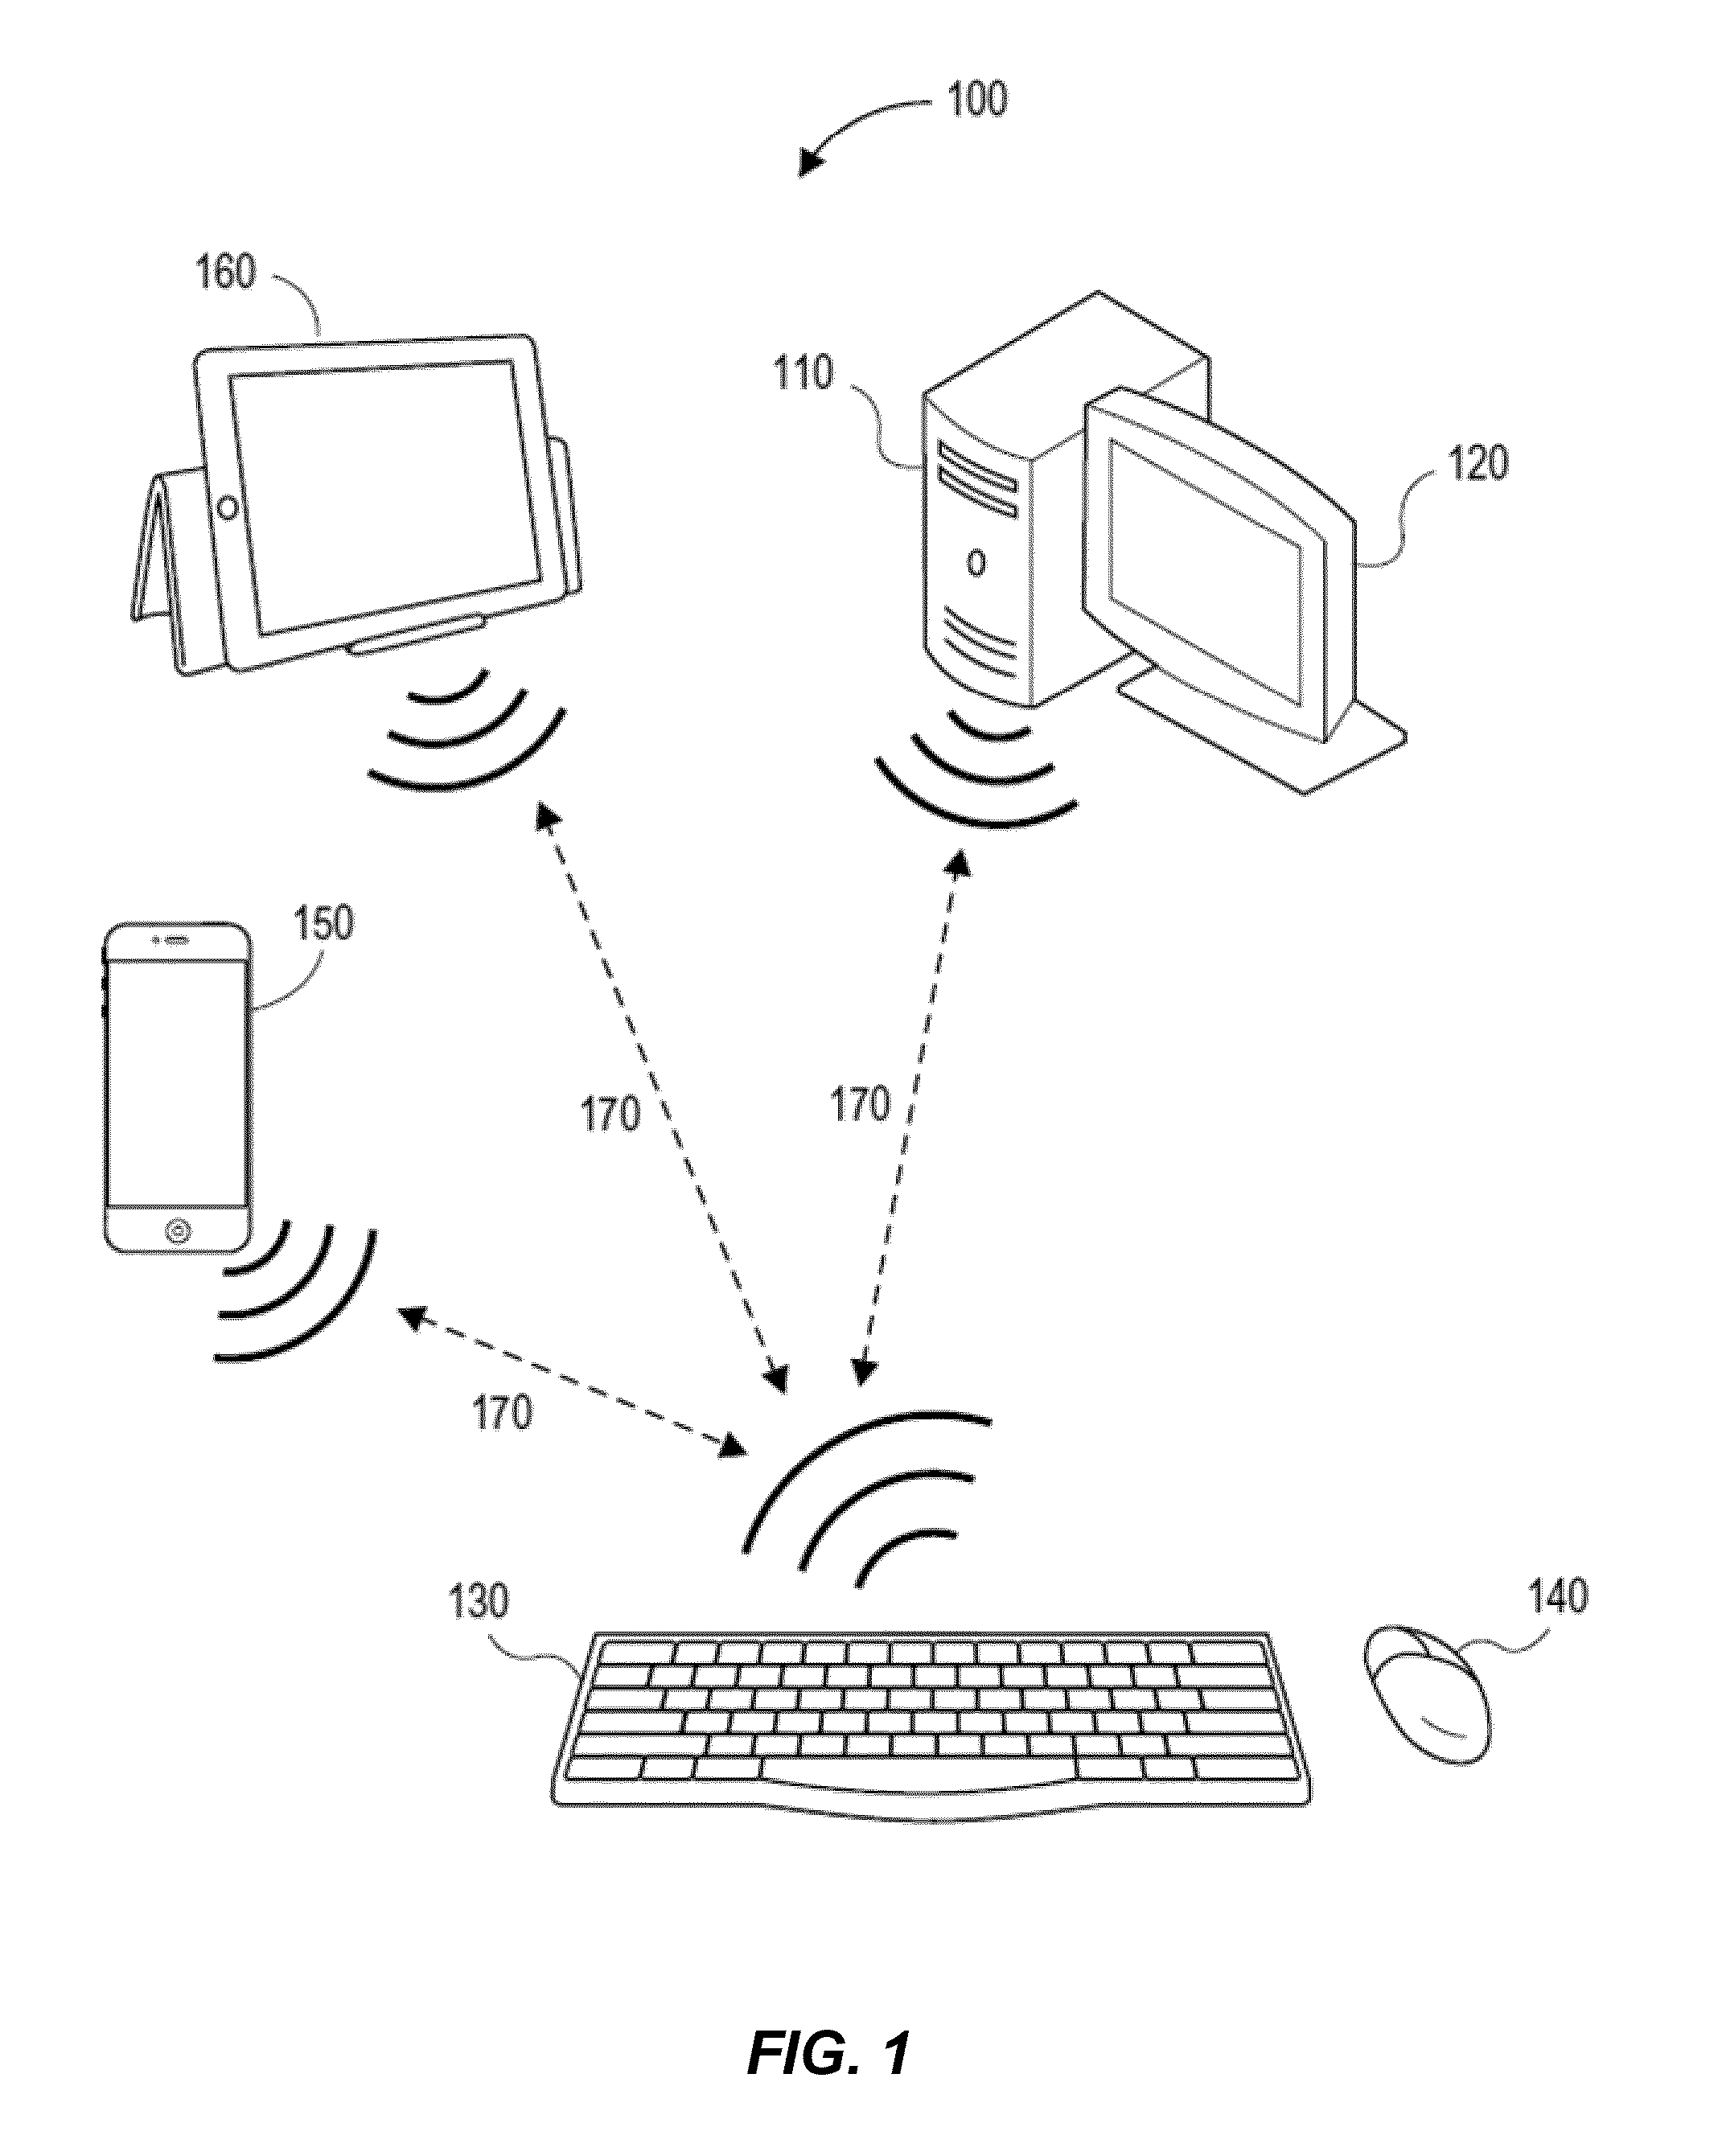 Universal input device